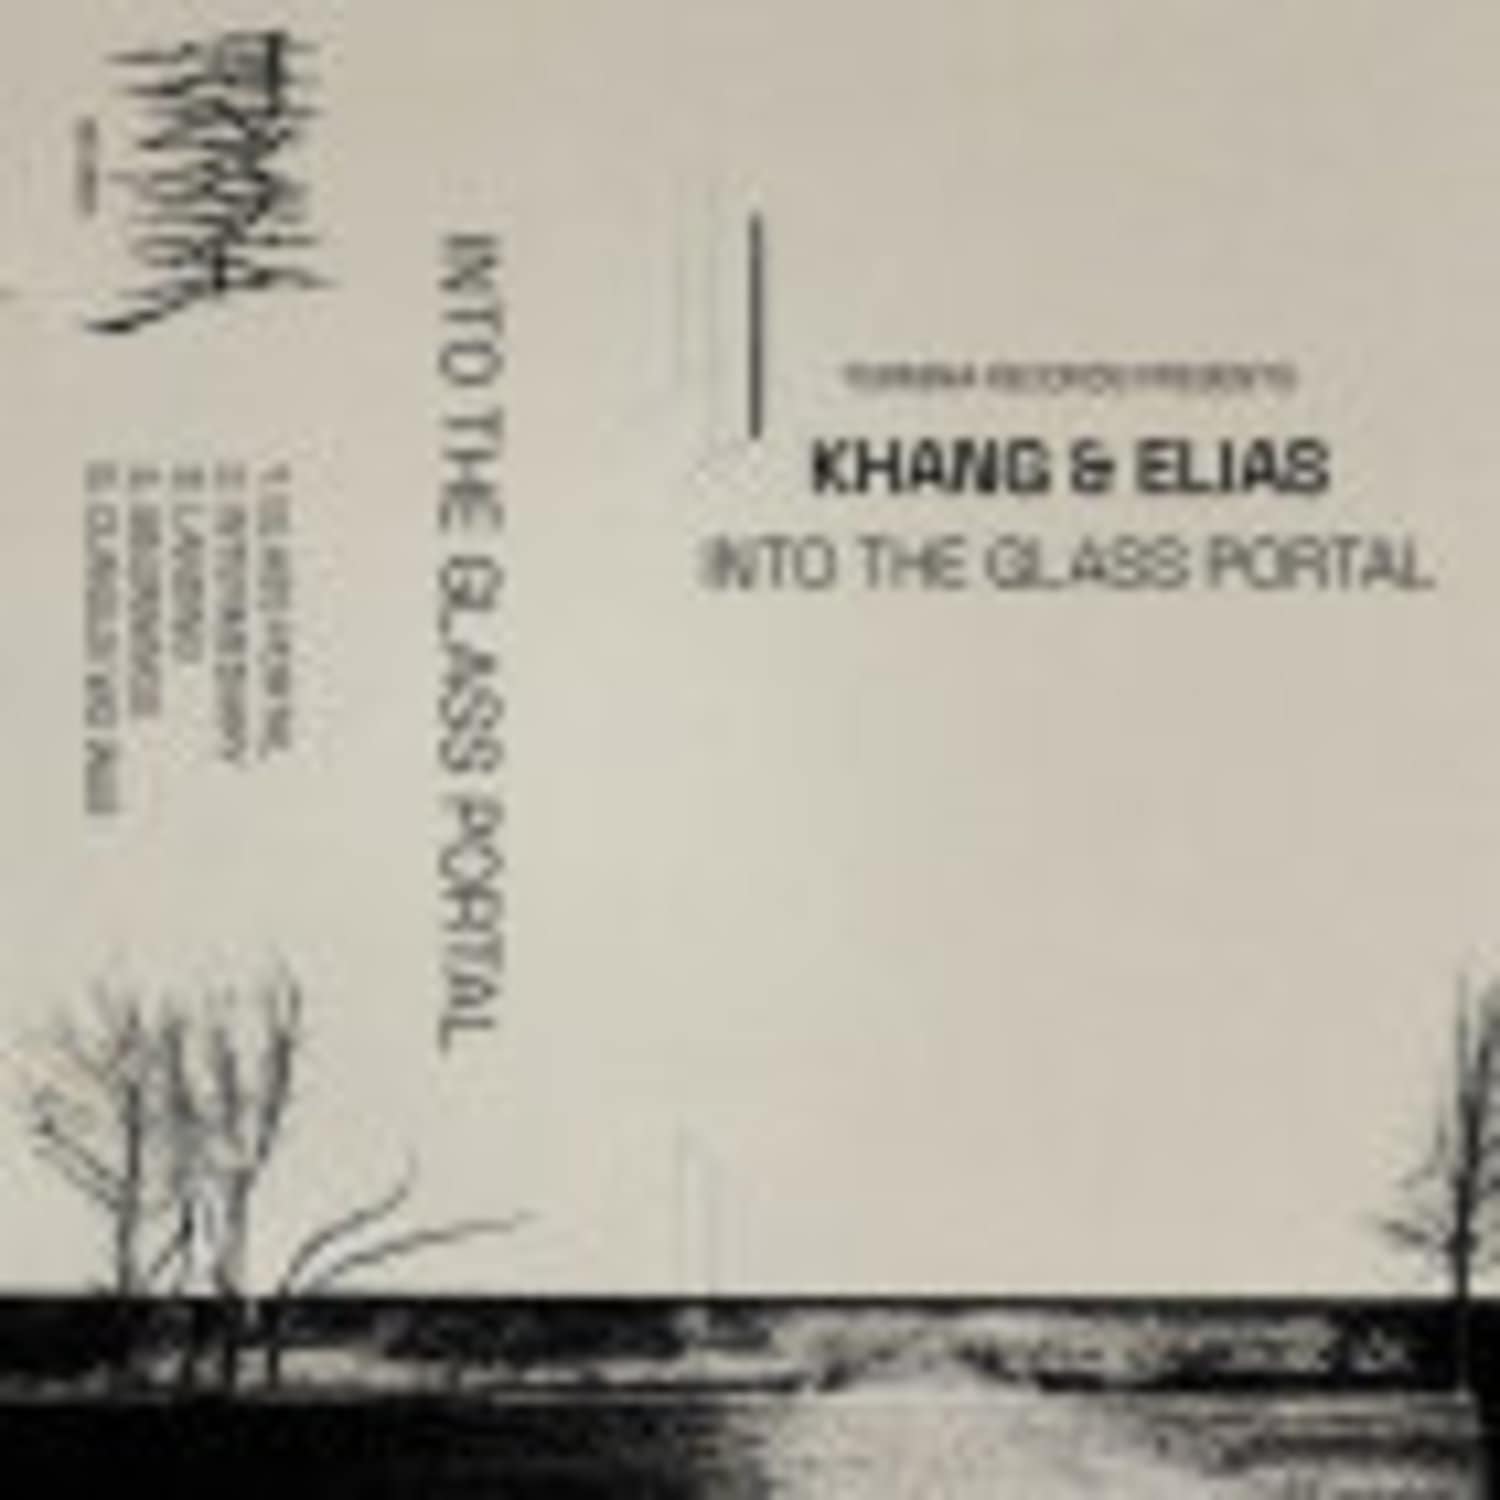 Khang & Elias - INTO THE GLASS PORTAL 